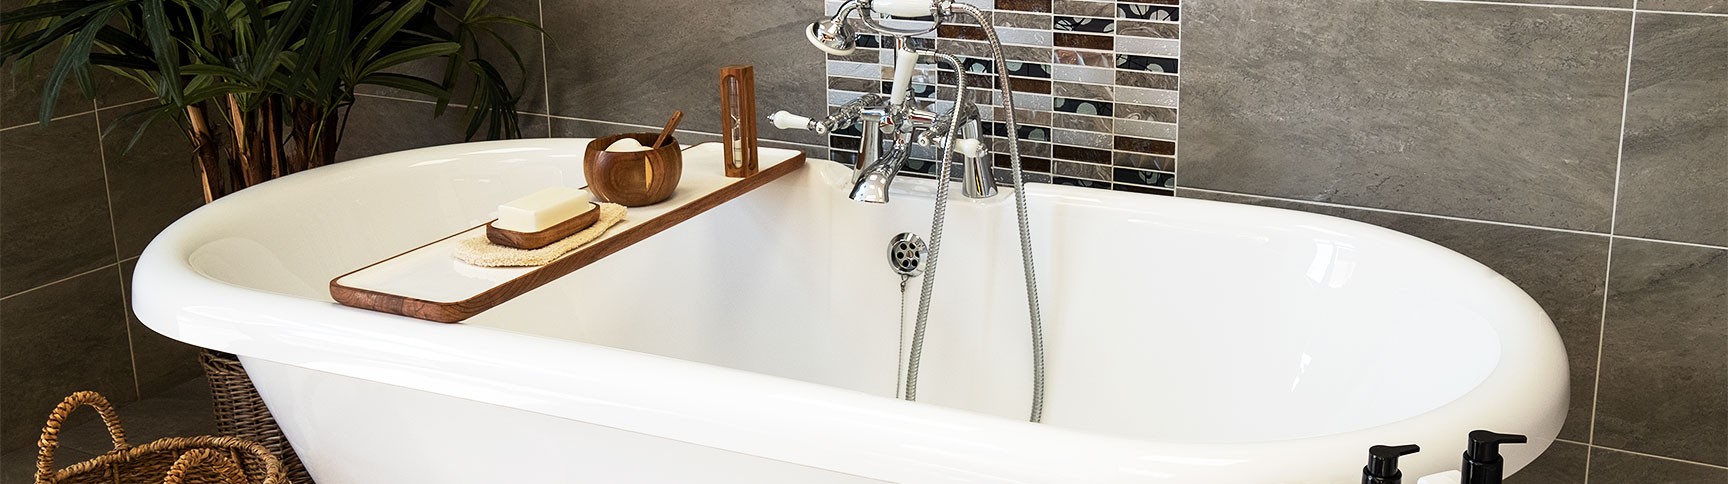 Bath Panels | Overflow Pipes | World of Tiles, Bathrooms & Wood Flooring